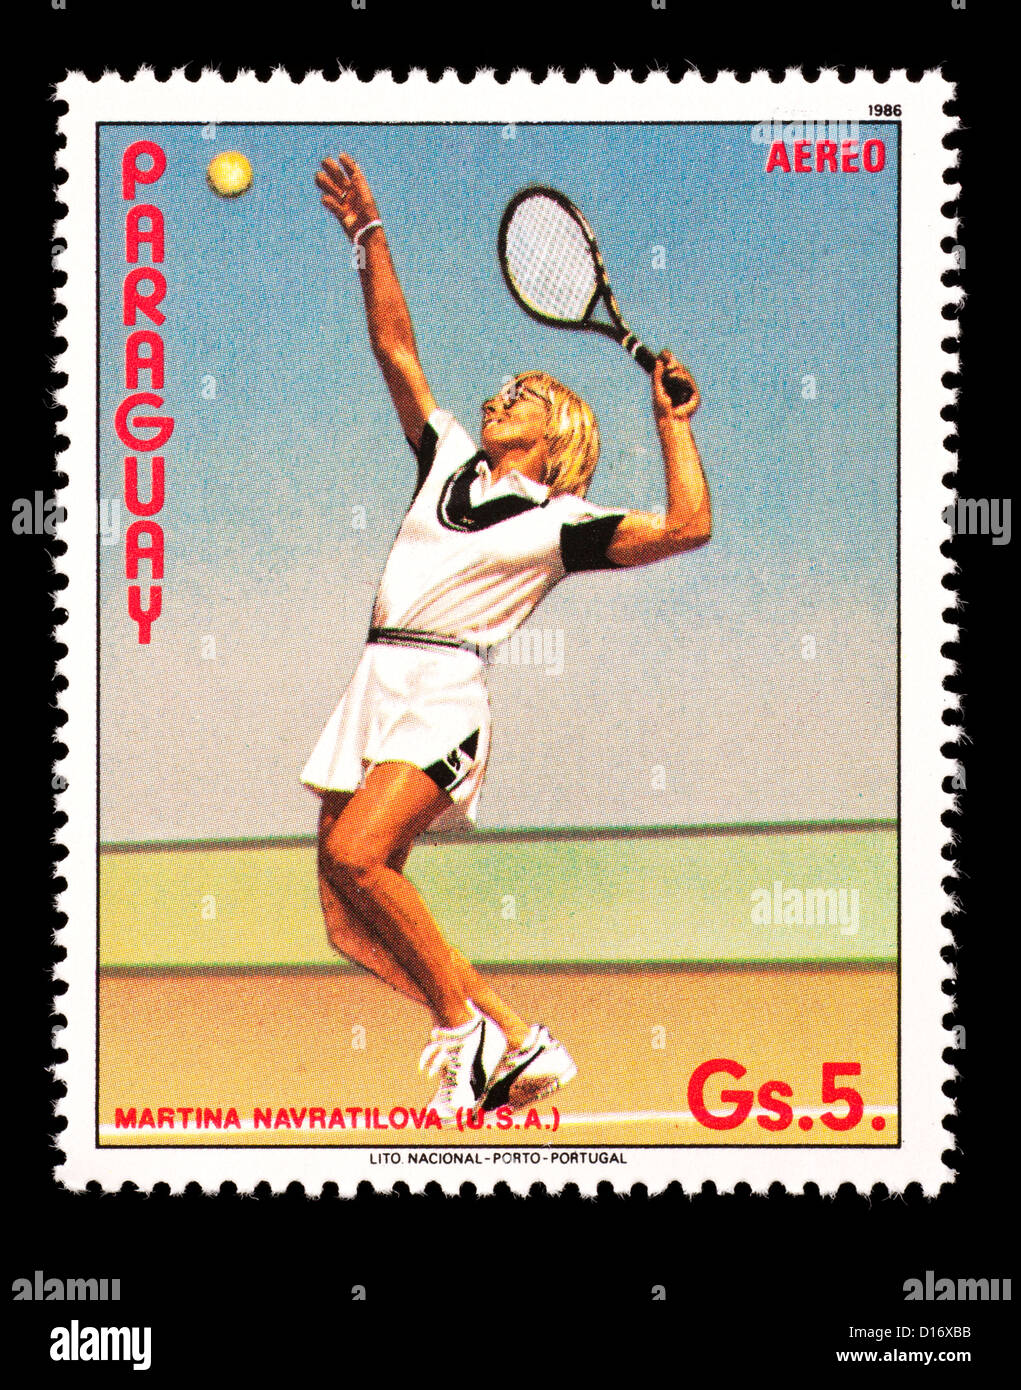 Postage stamp from Paraguay depicting Martina Navratilova playing tennis  Stock Photo - Alamy